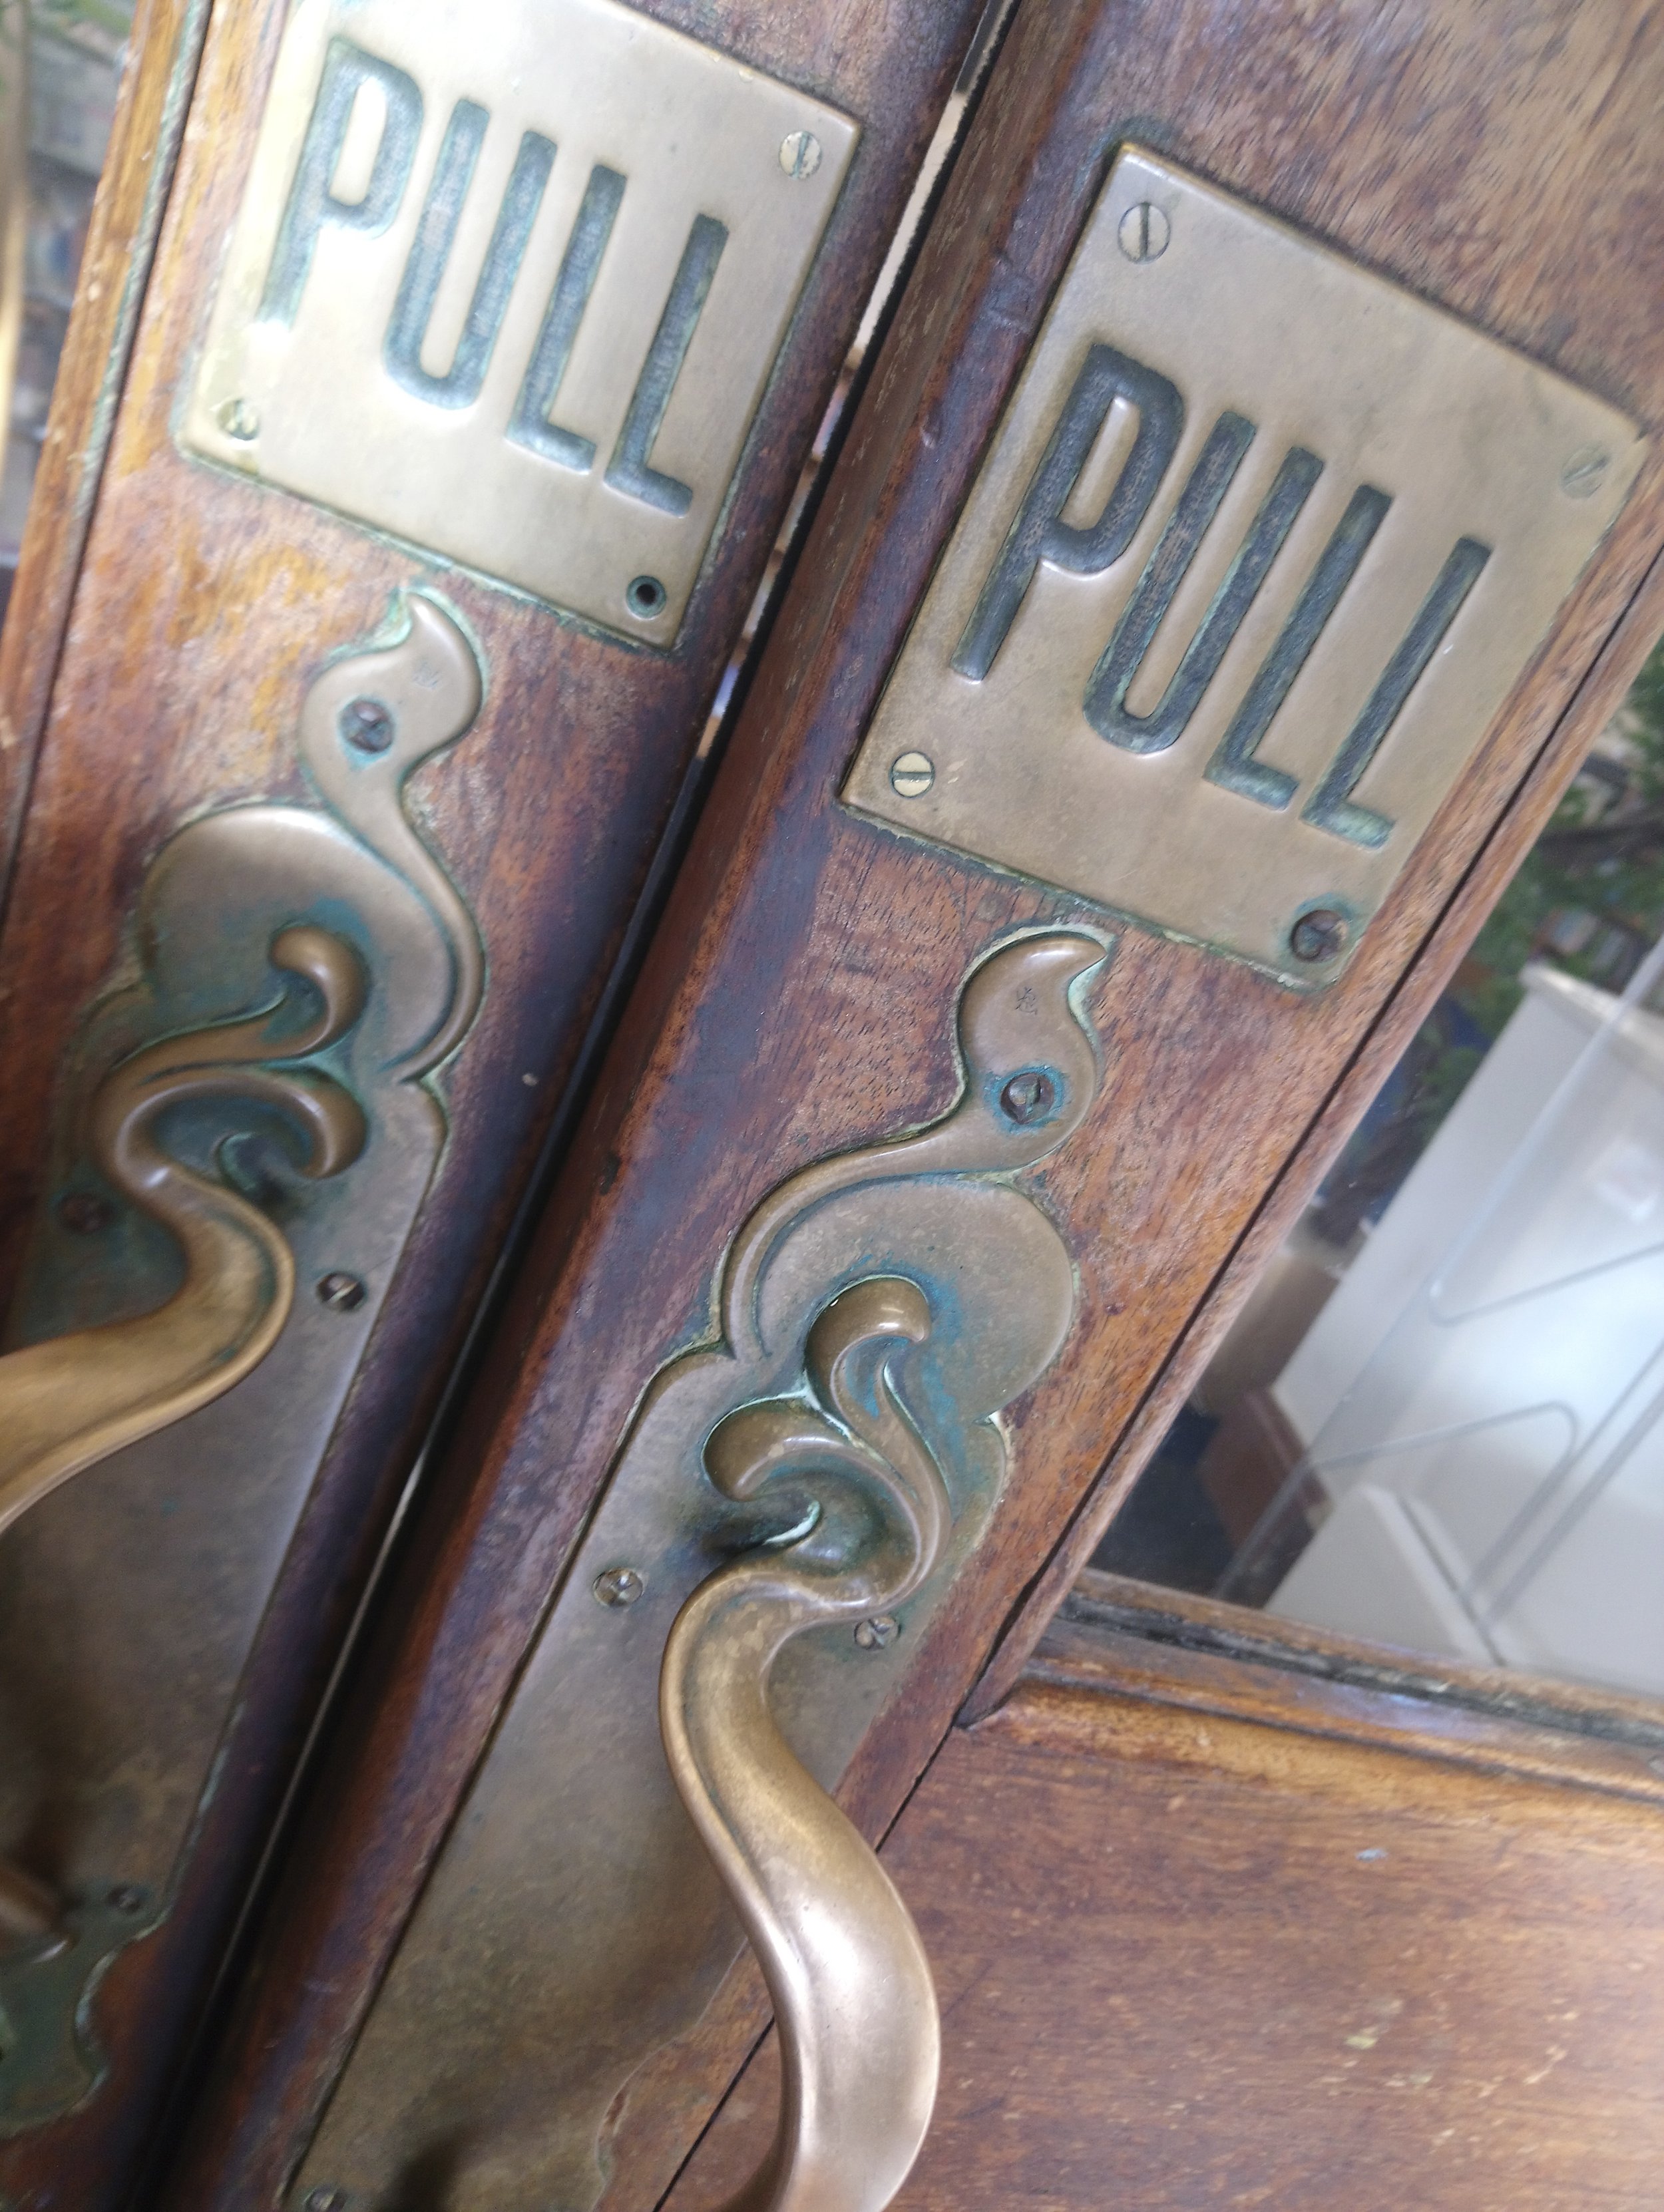 Doors, PUL PULL RM blog.jpg